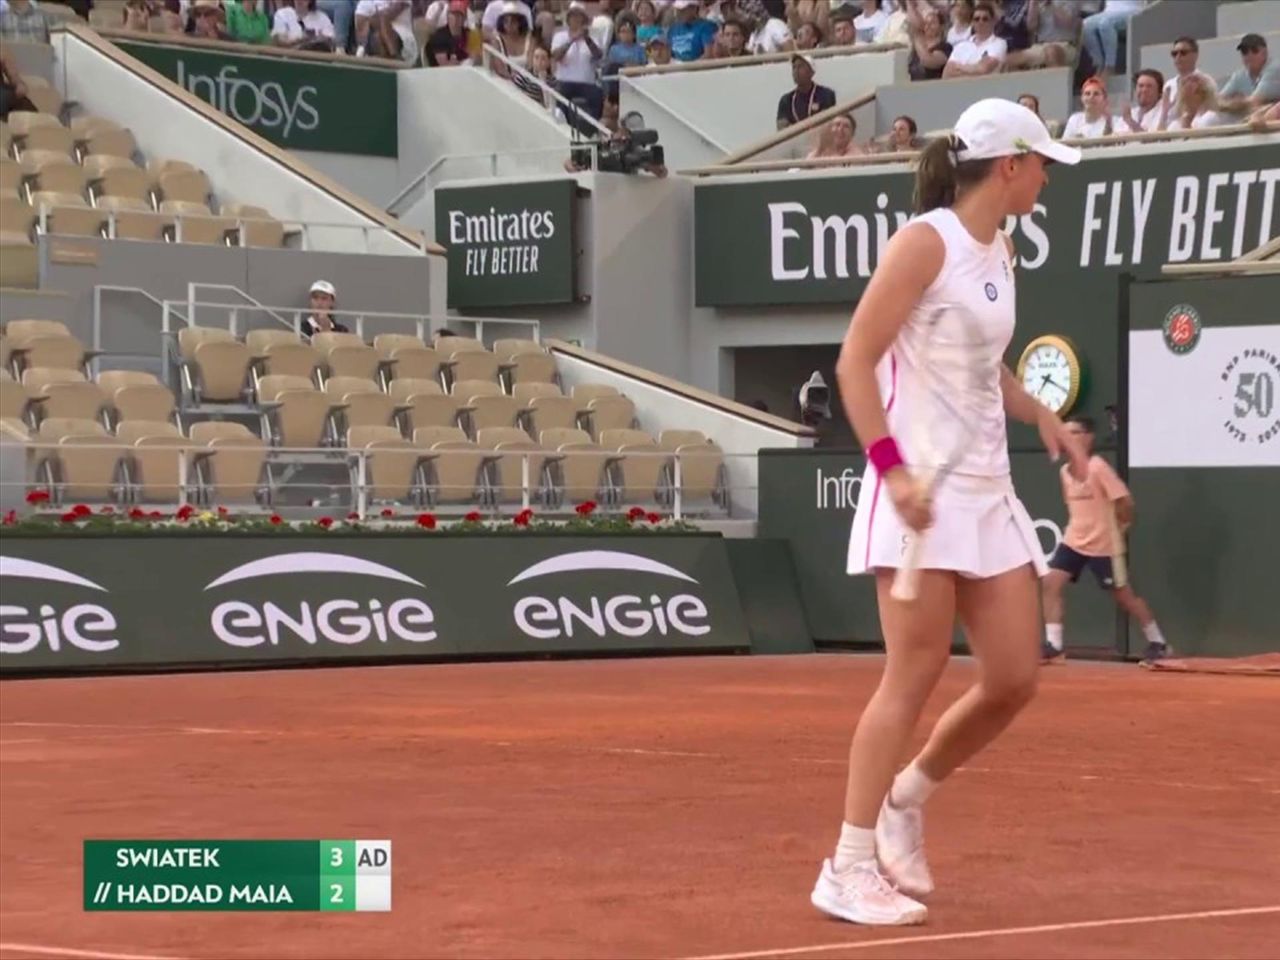 French Open It turns against her - Iga Swiatek breaks Beatriz Haddad Maia for second time in semi-final - Tennis video